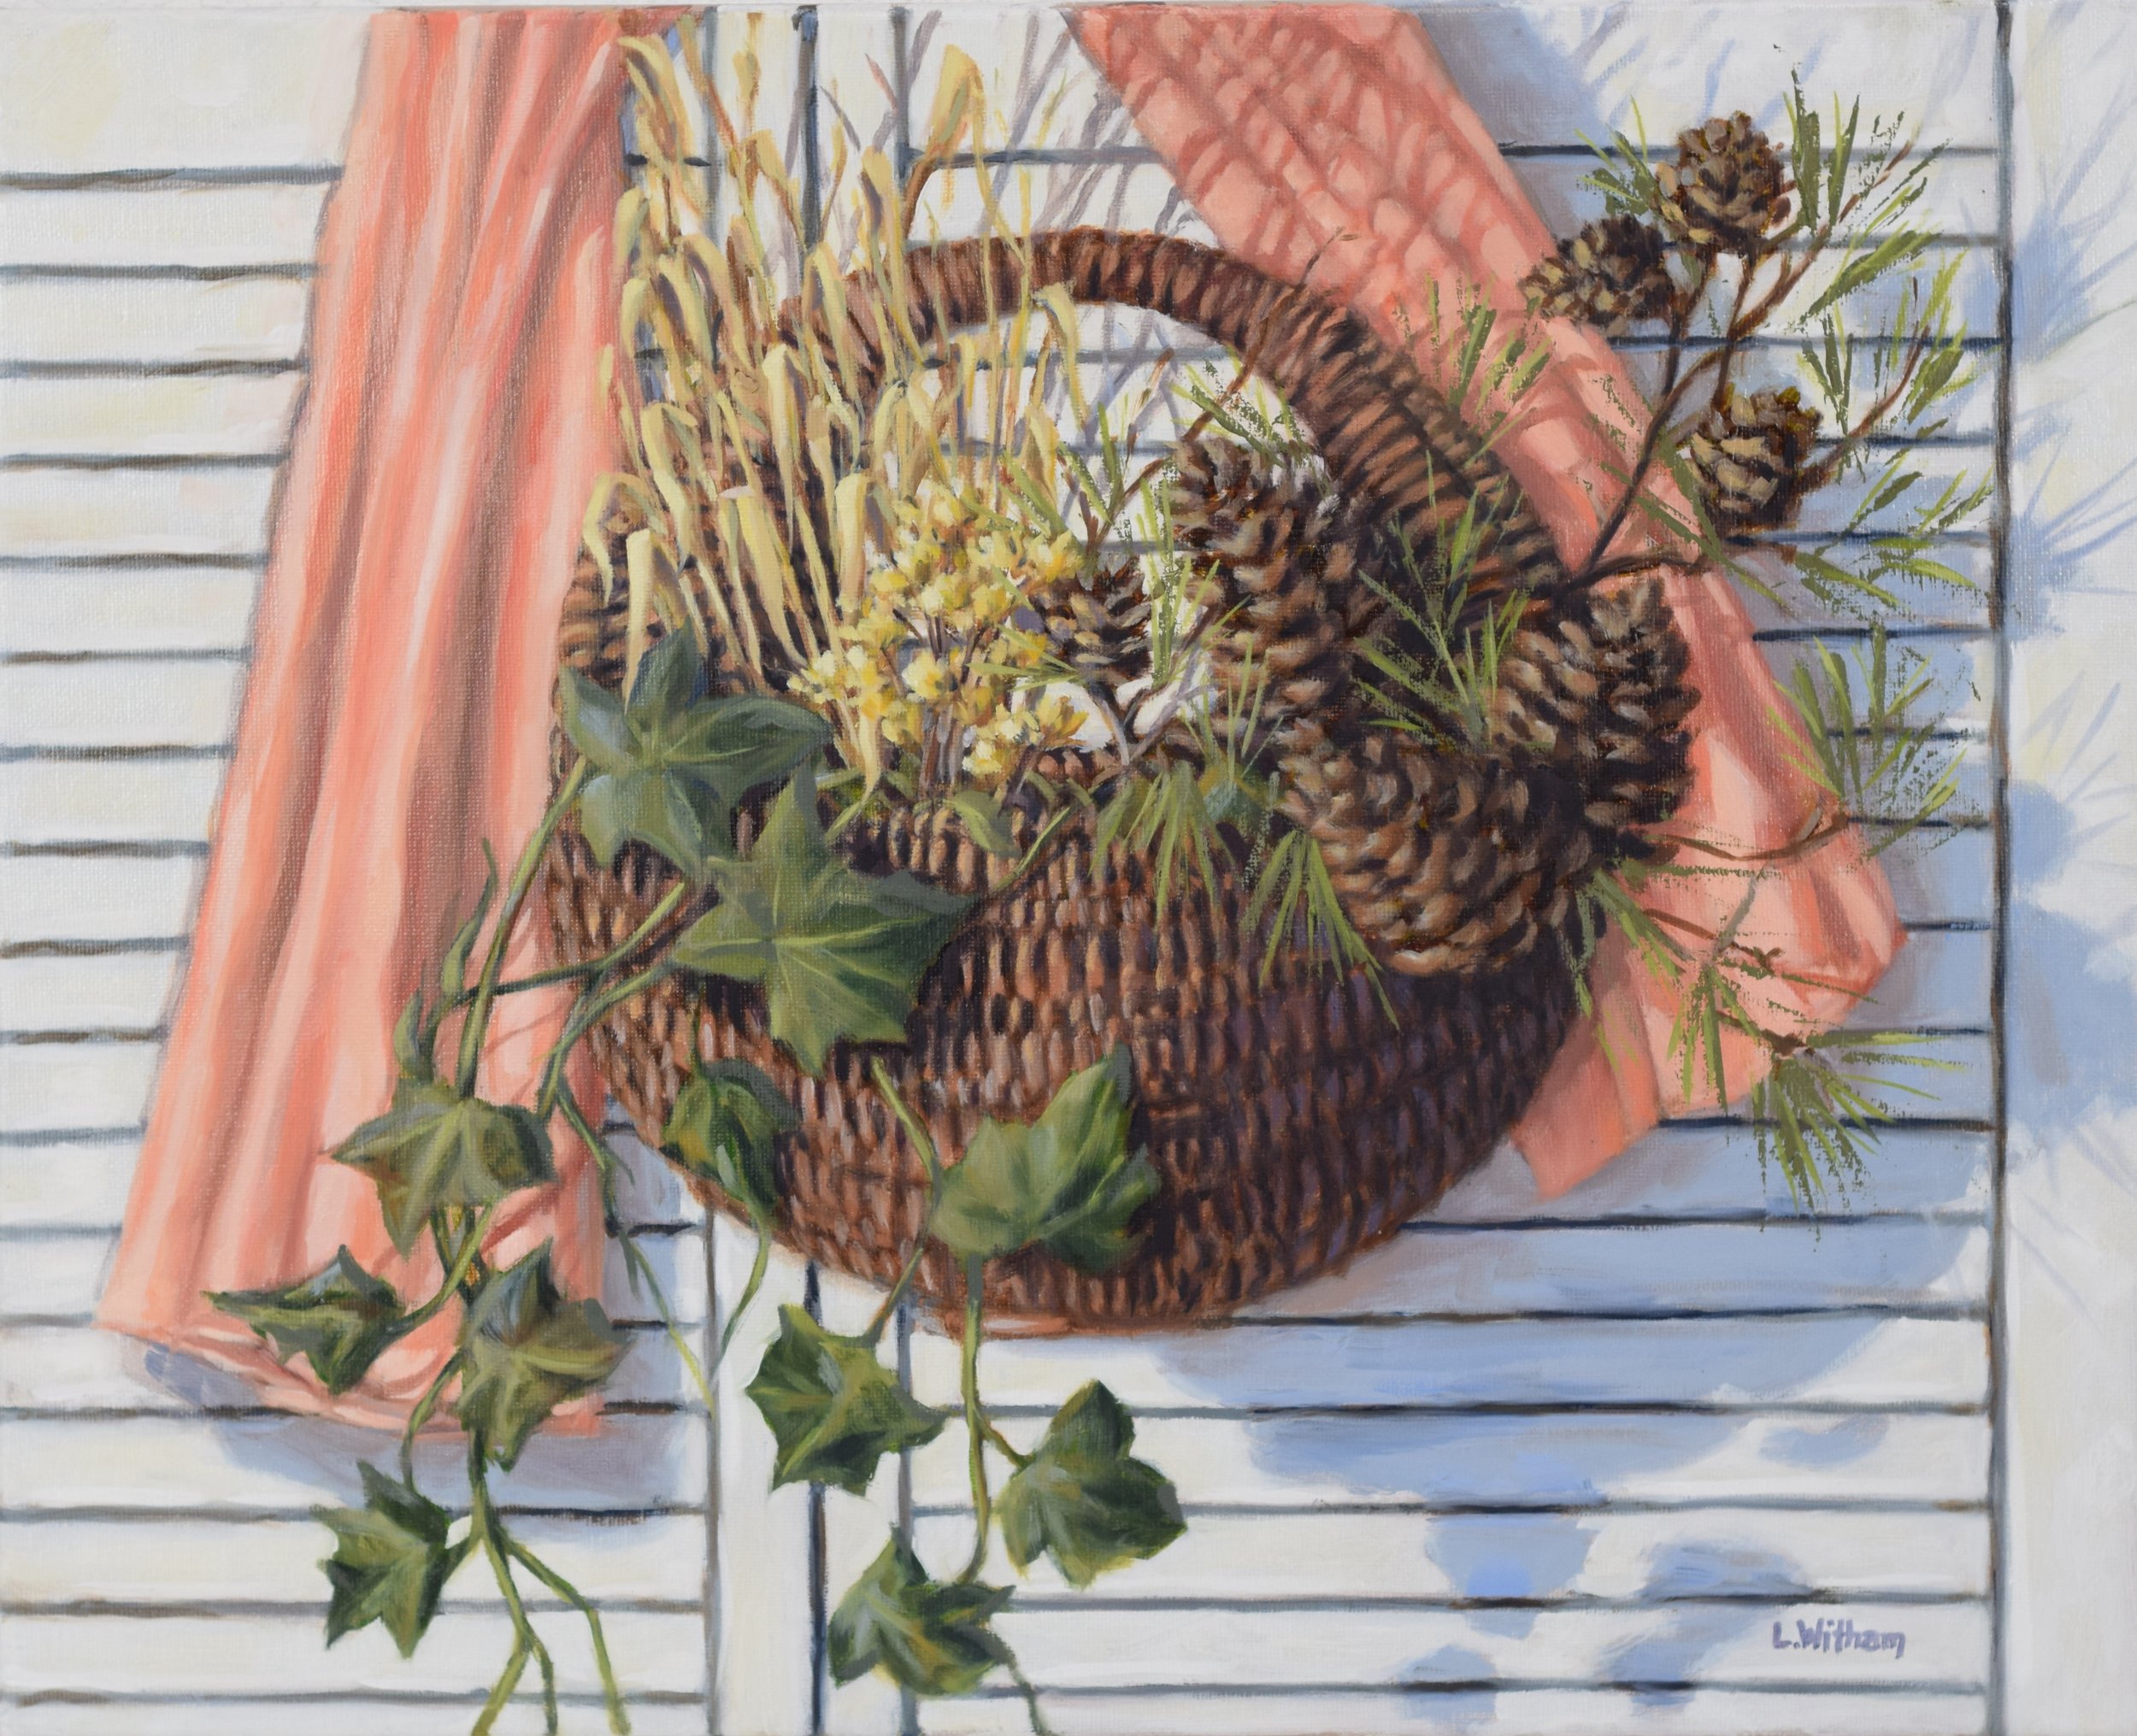 Basket on Orange, Oil on canvas, 18x24